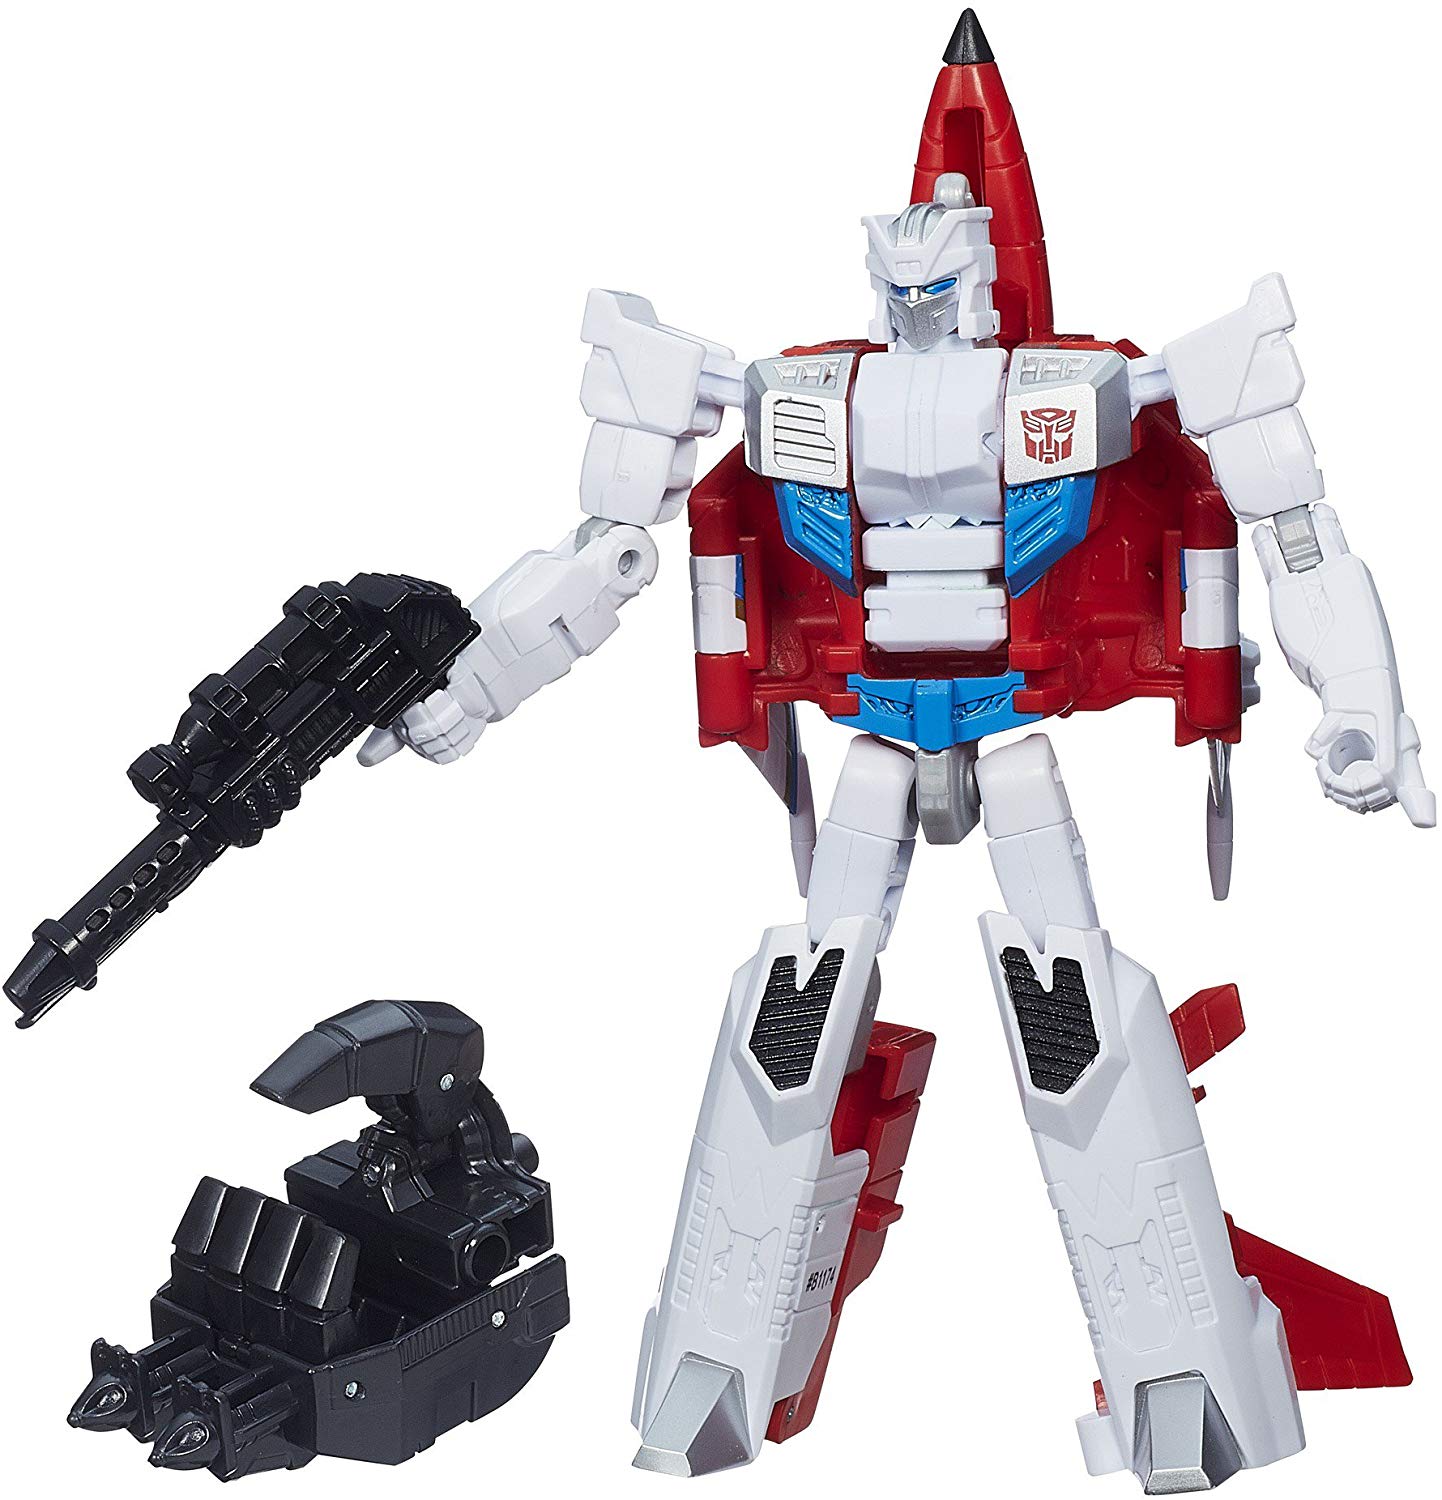 Transformers Generations Combiner Wars Deluxe Class Firefly Action Figure 2